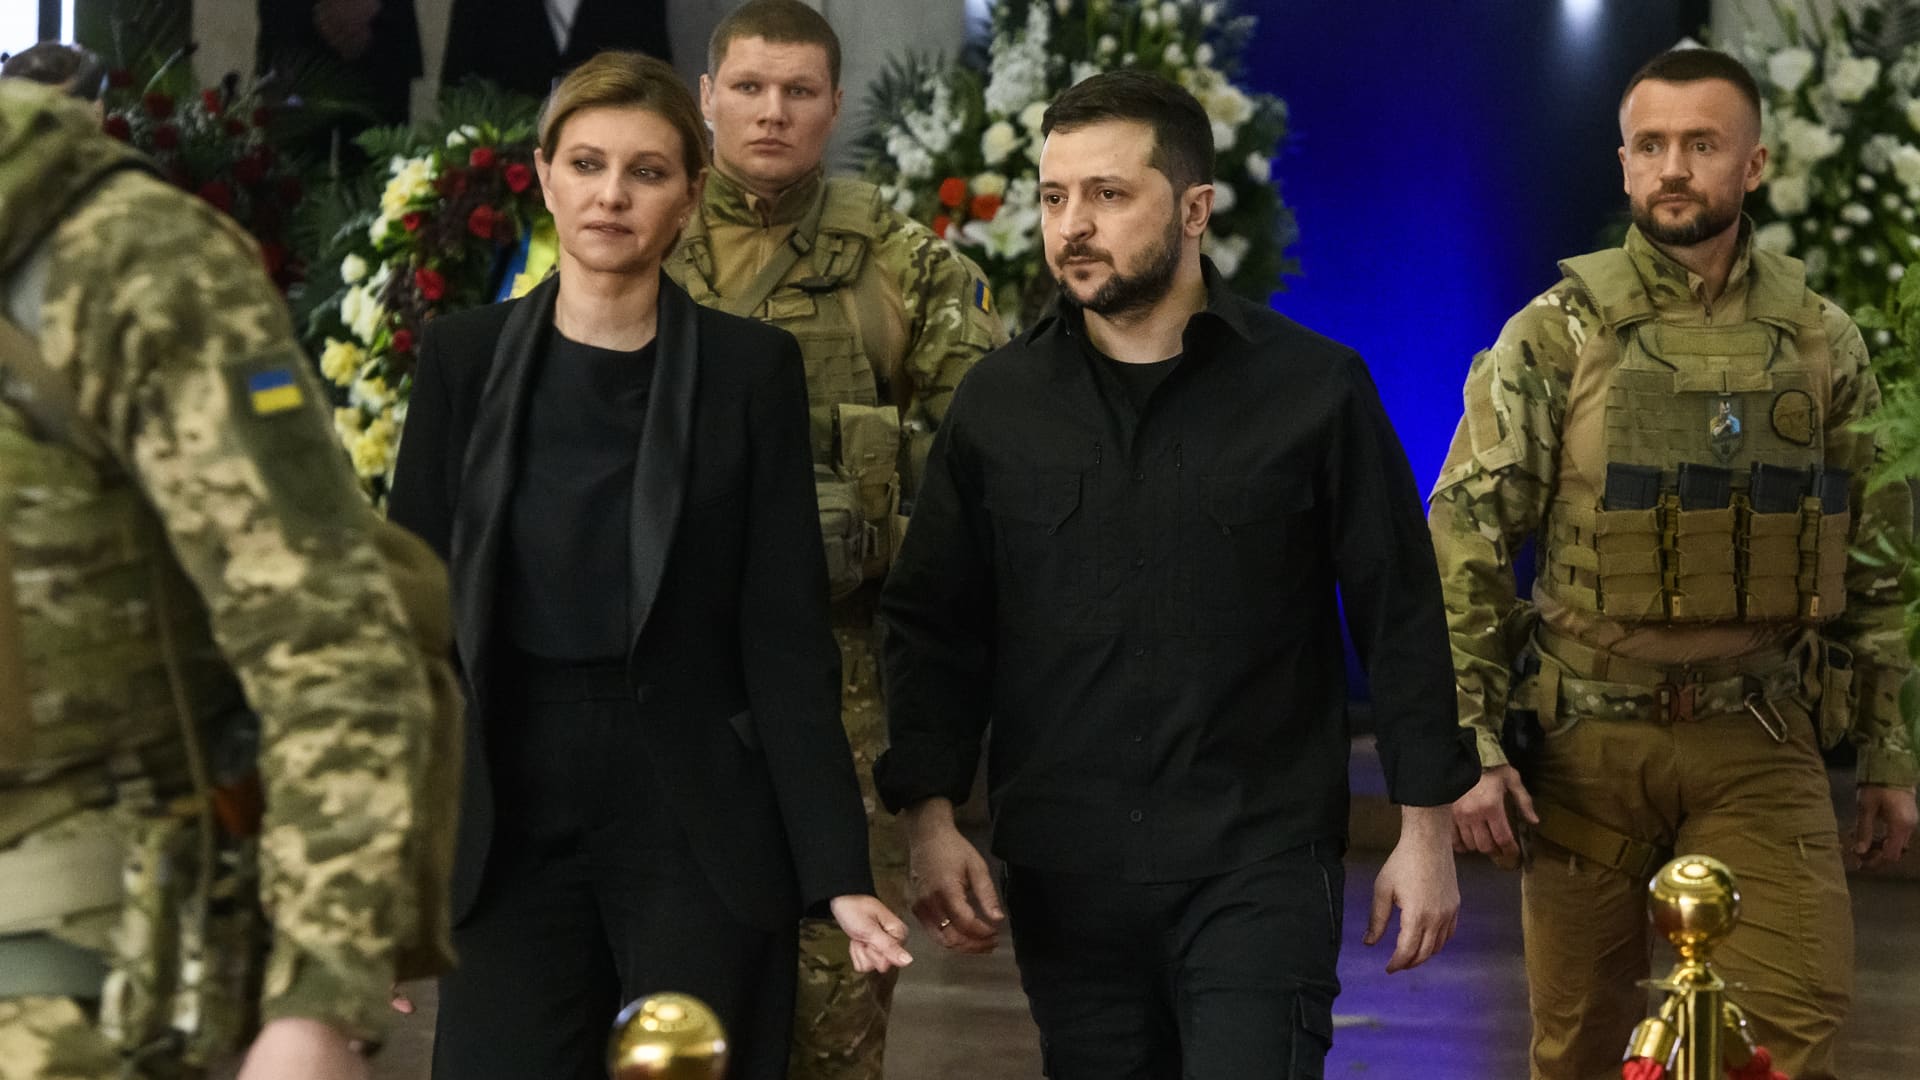 Ukraine's President Volodymyr Zelensky and his wife Olena Zelenska attend the funeral ceremony of Ukrainian first president Leonid Kravchuk in Kyiv, Ukraine, May 17, 2022.